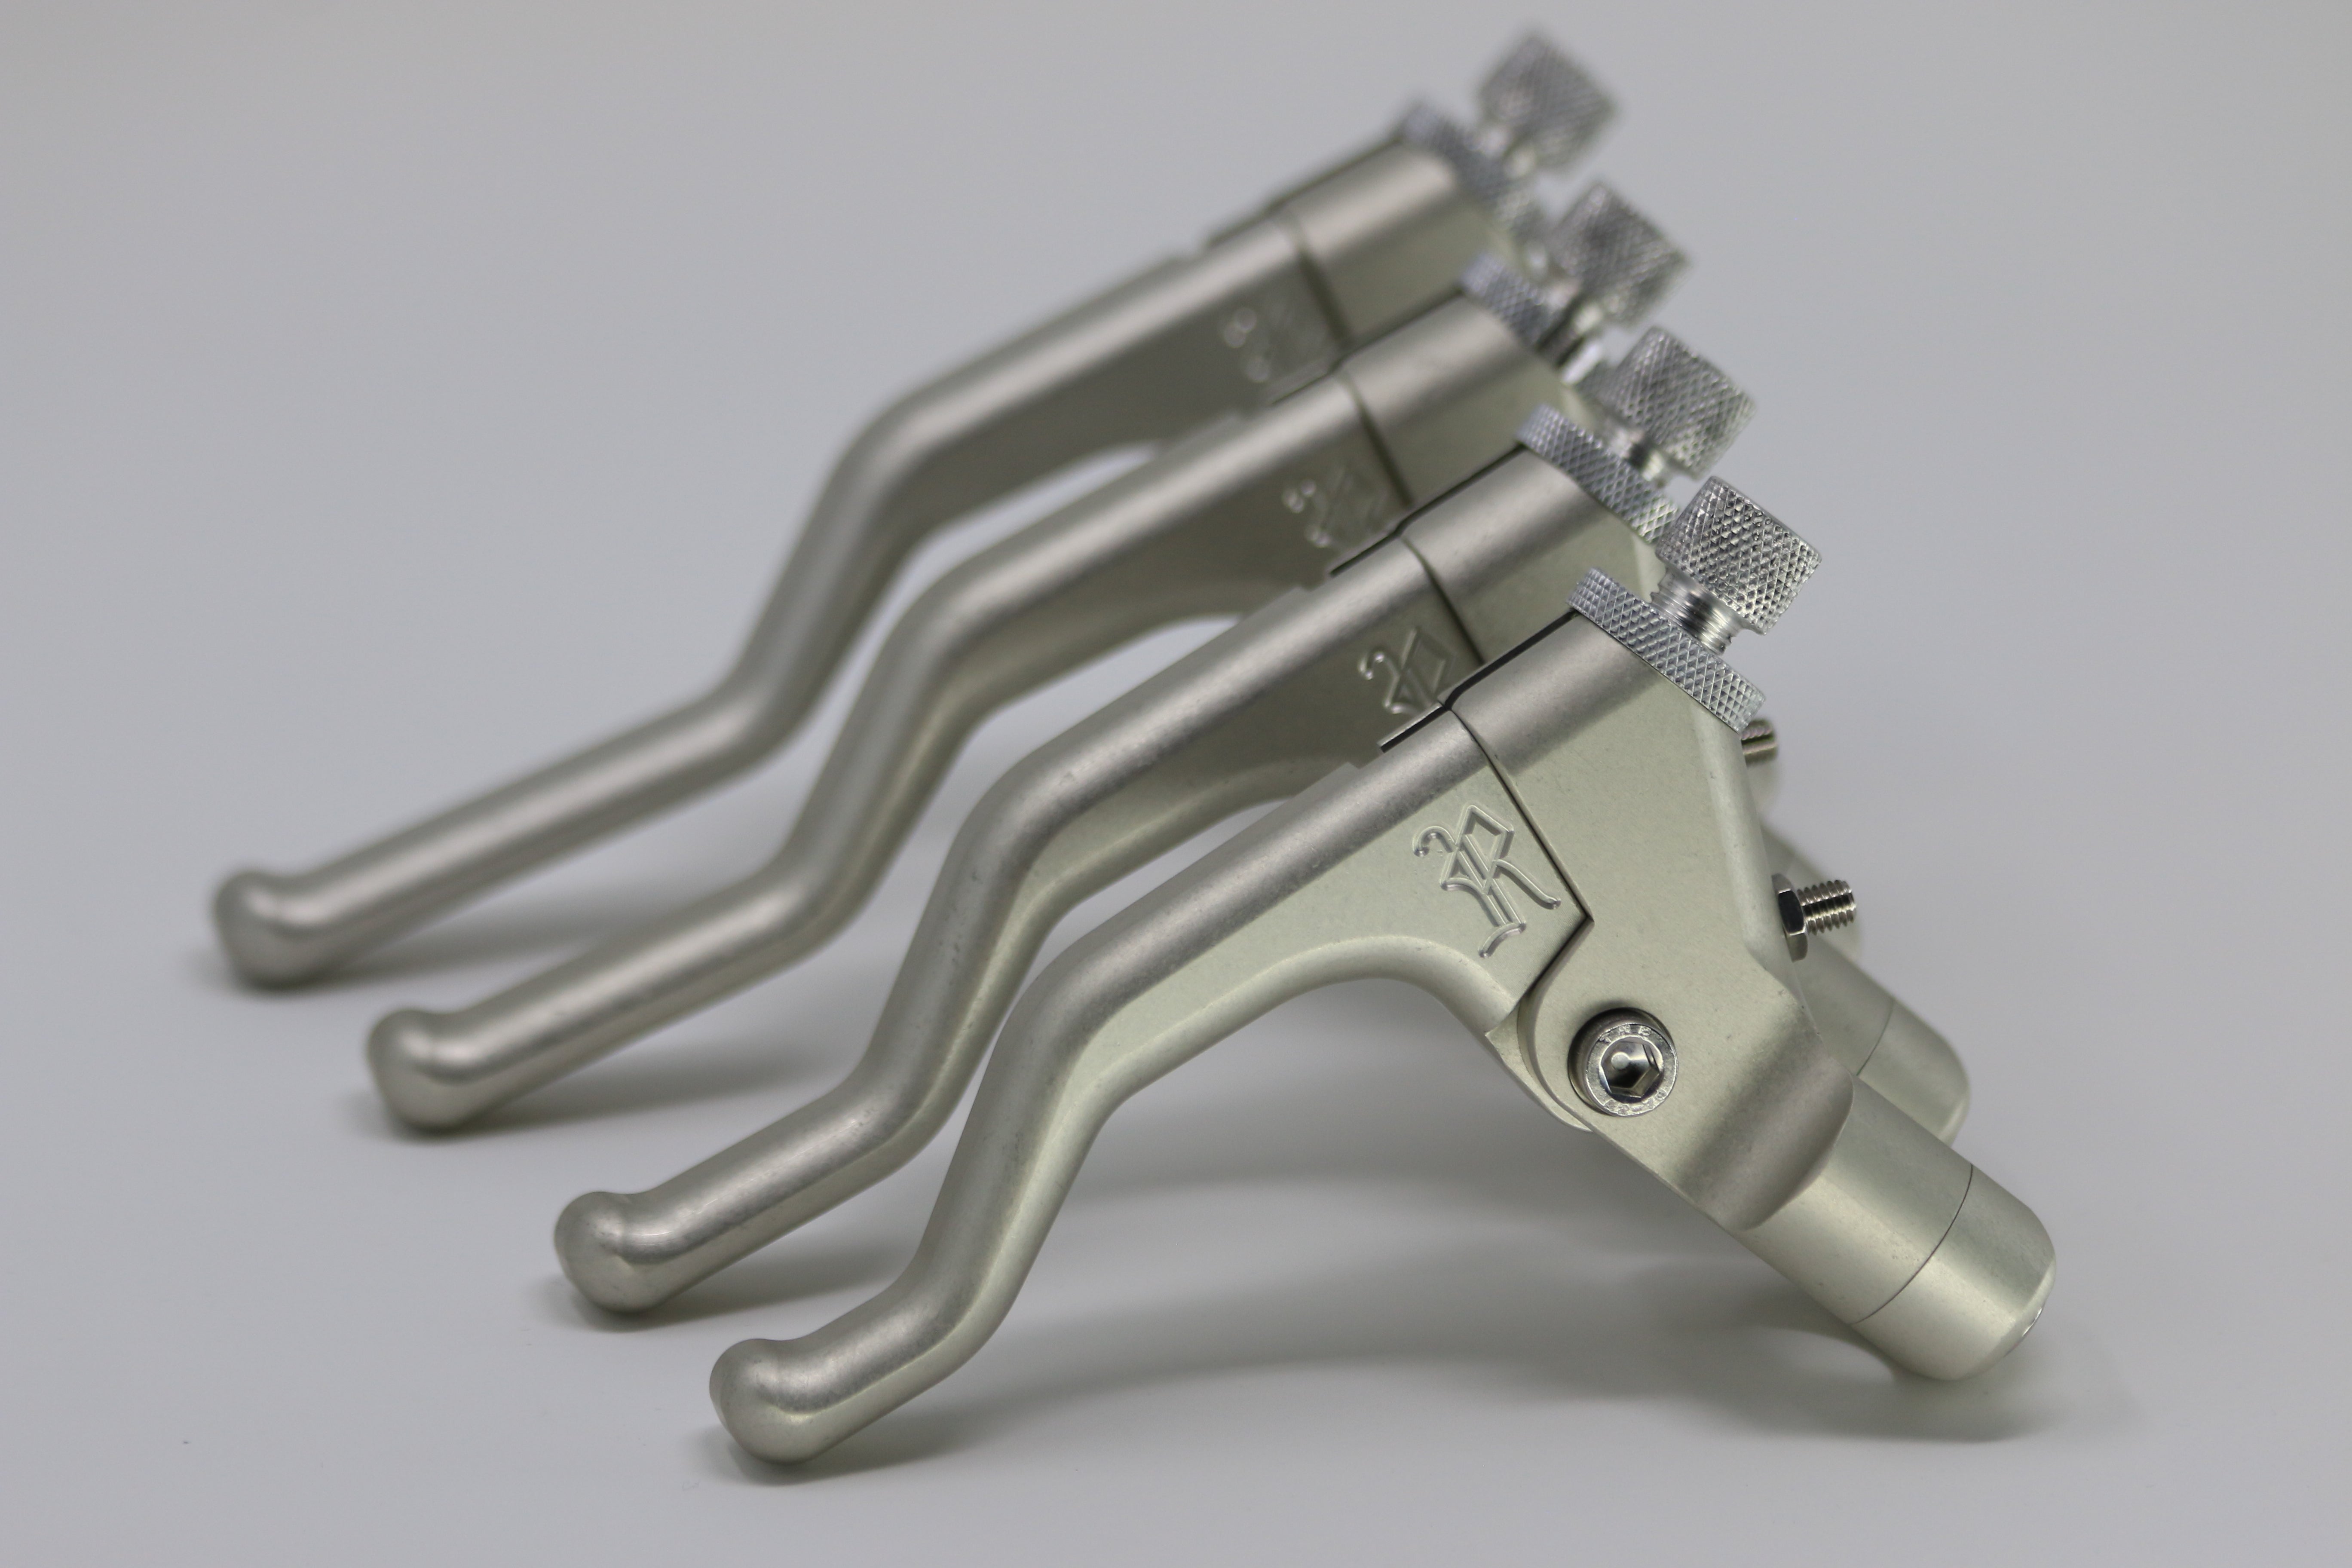 Four Finger Universal Bone Series Tumbled RSC Lever